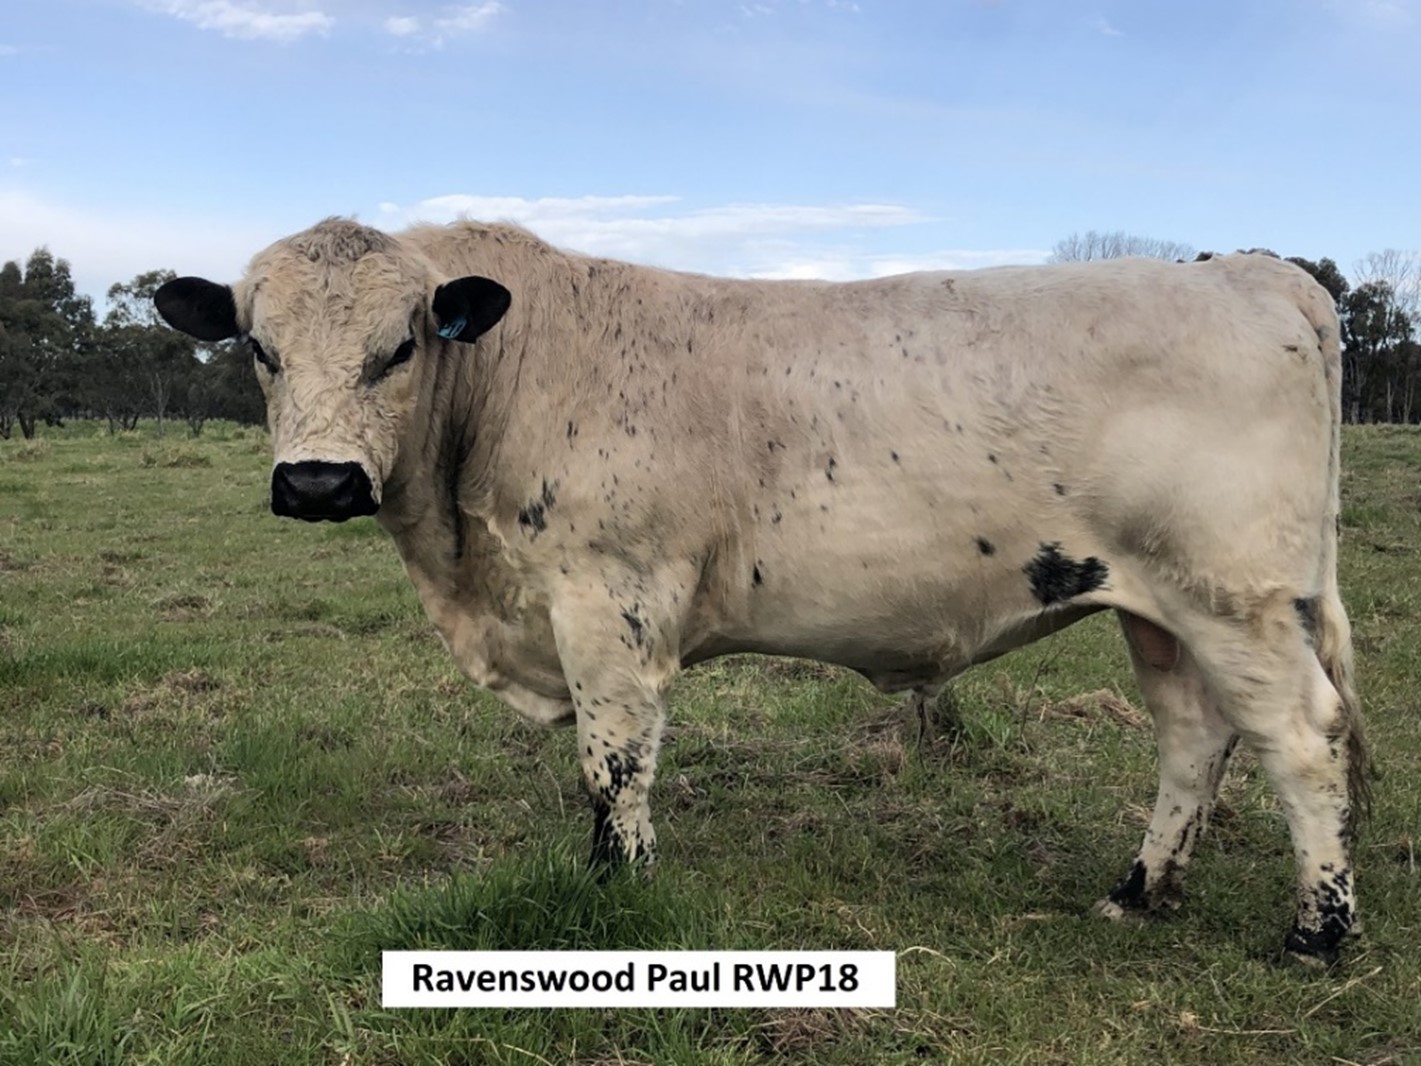 RAVENSWOOD PAUL RWP18